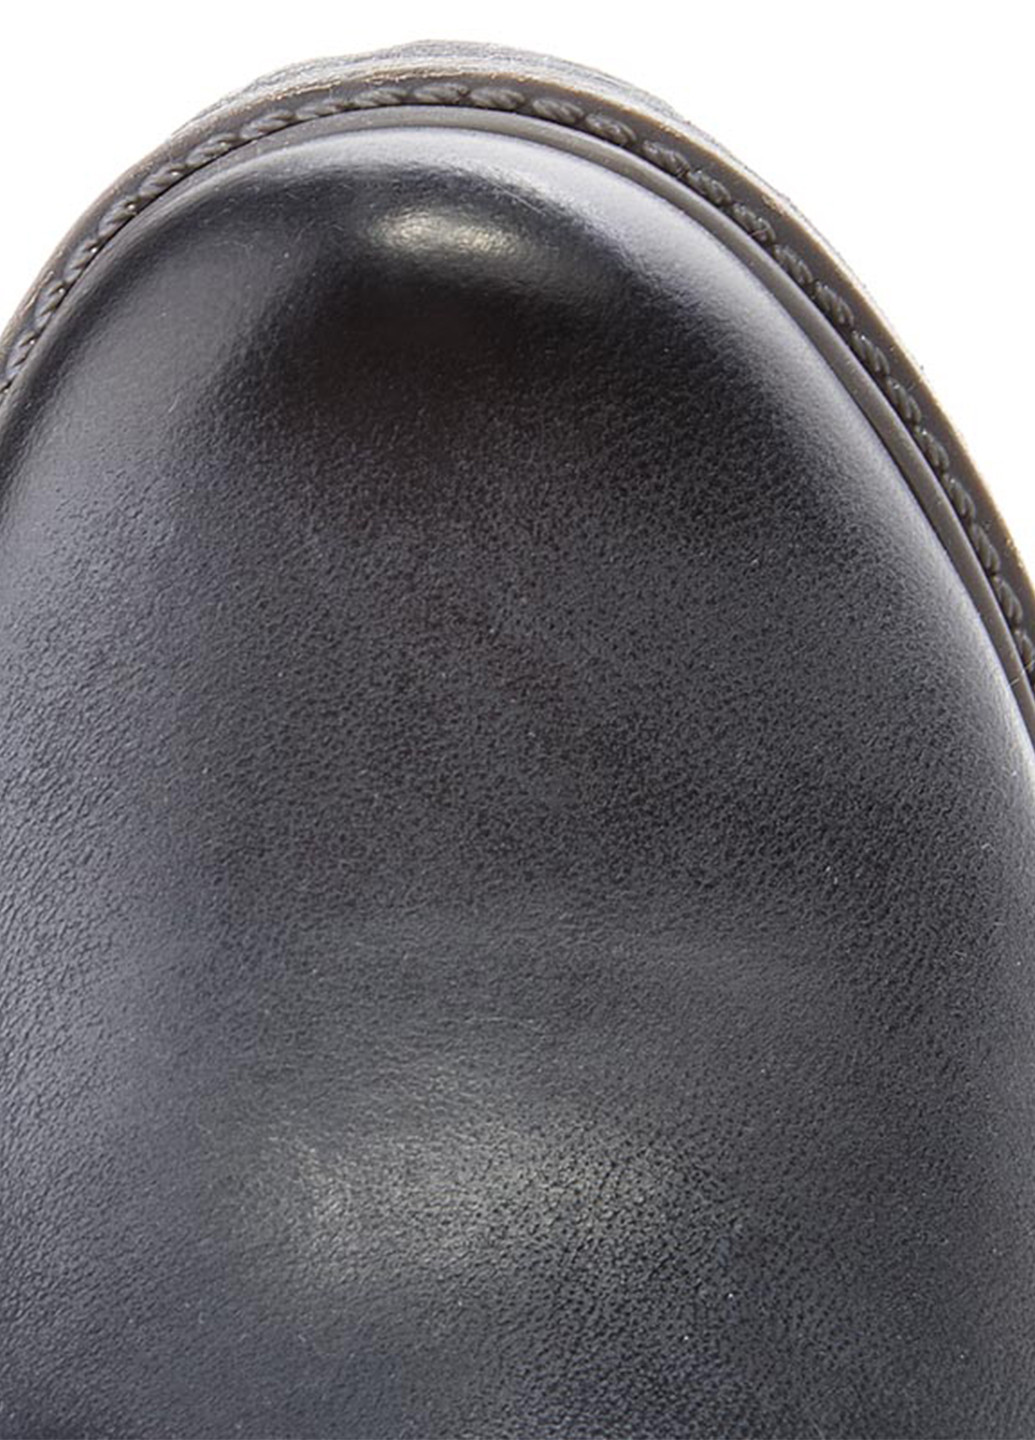 Зимние черевики wi20-aspen-02 тимберленды Lasocki с логотипом, с тиснением